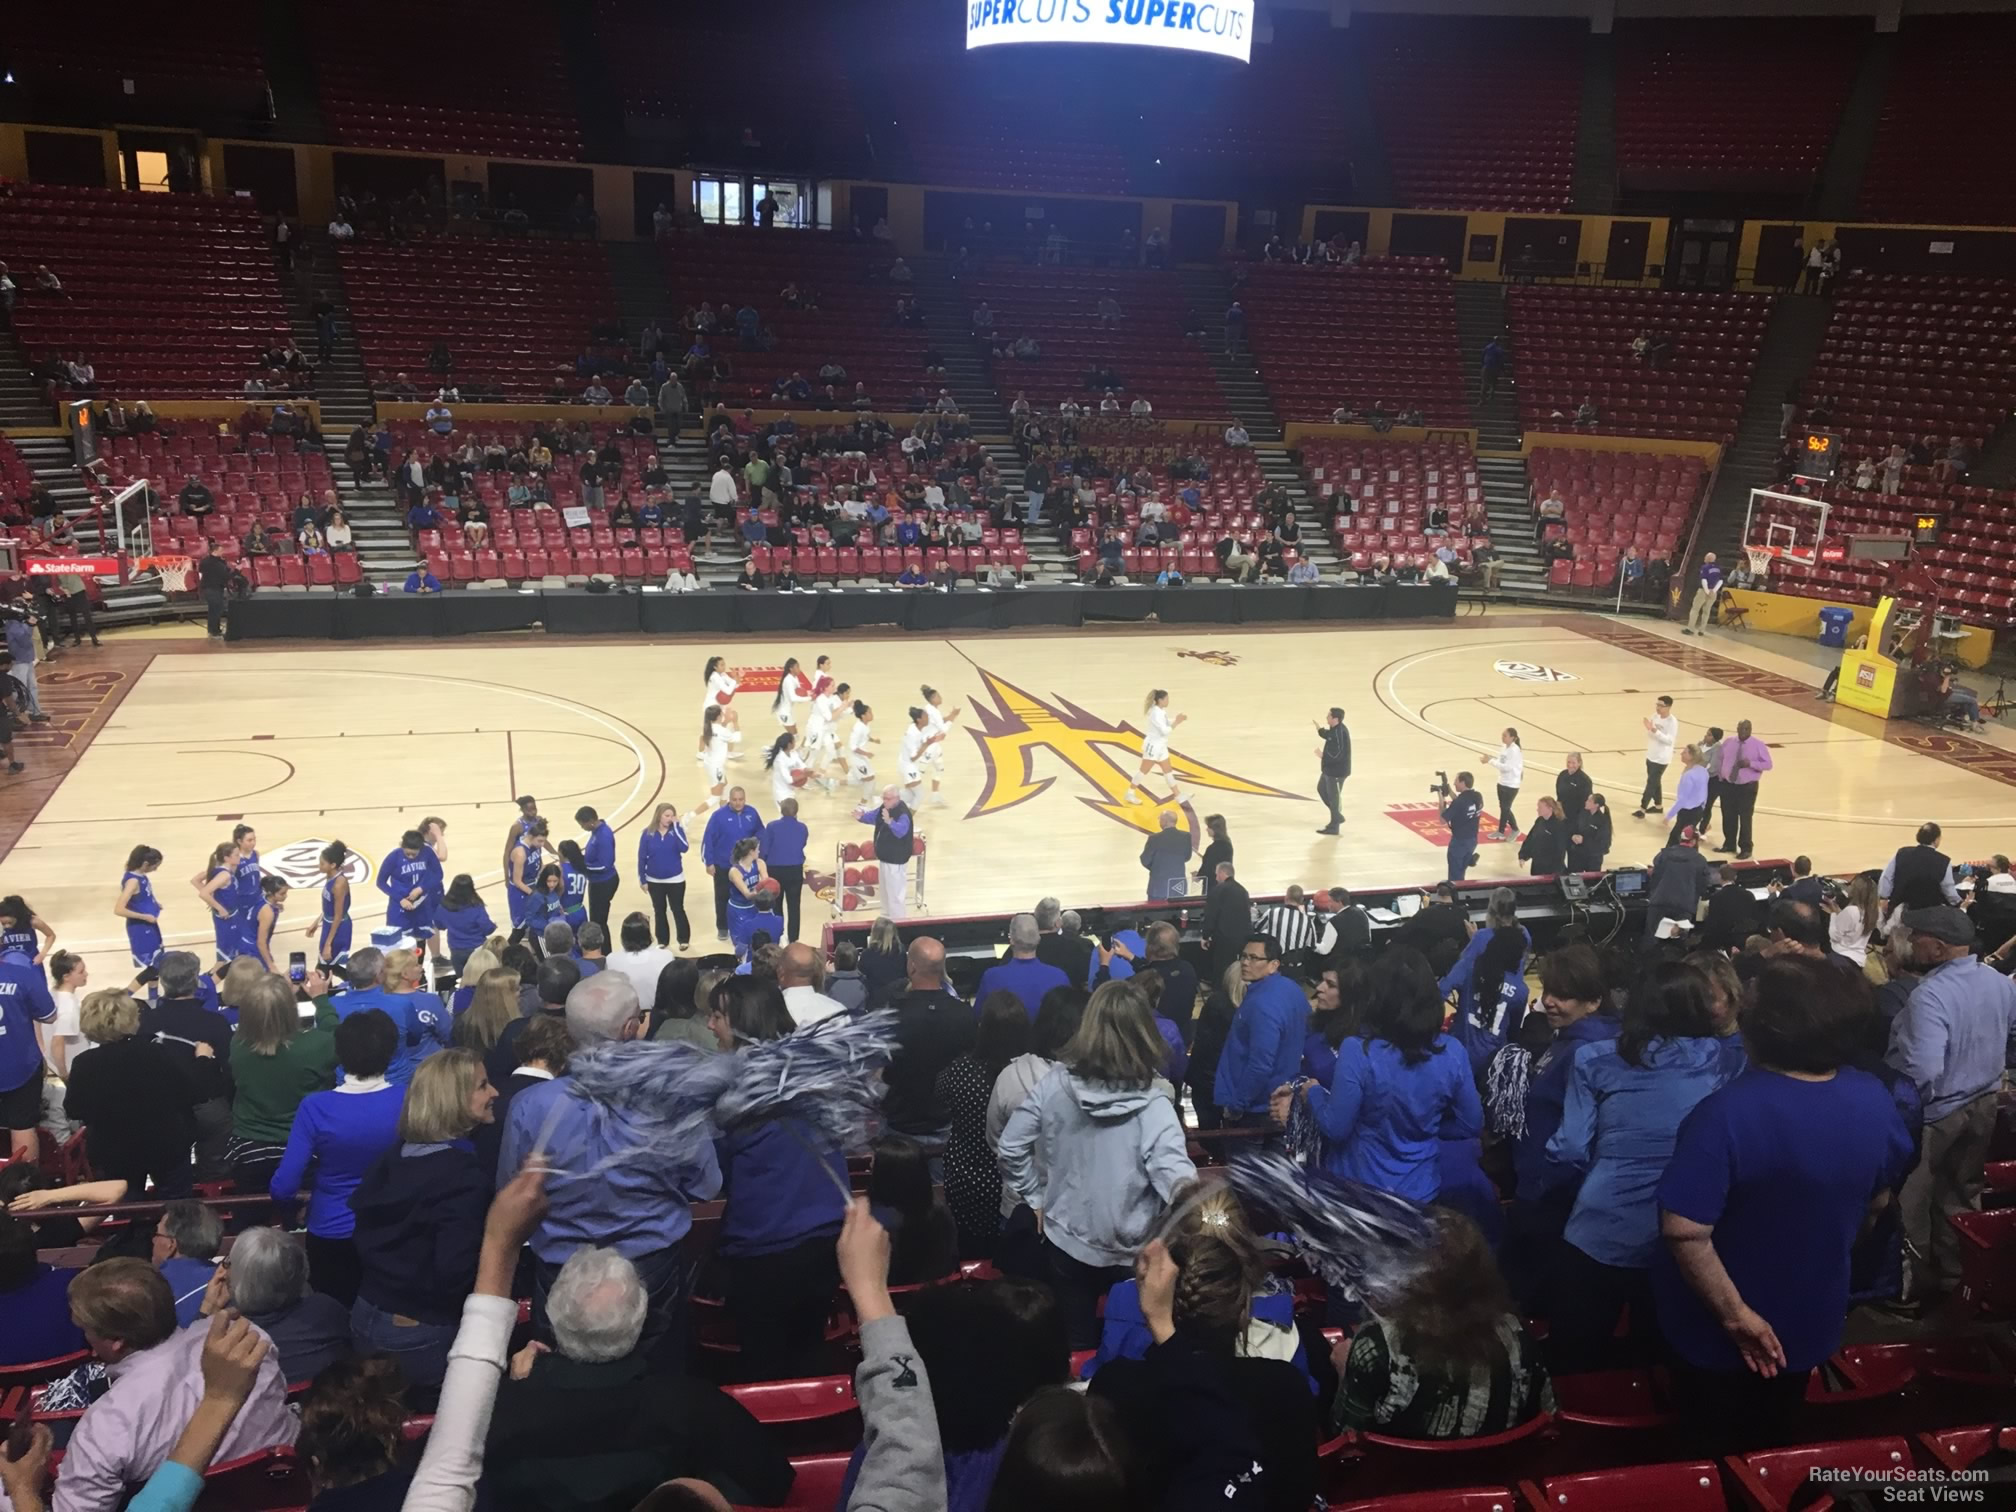 Desert Financial Arena - Facilities - Arizona State University Athletics